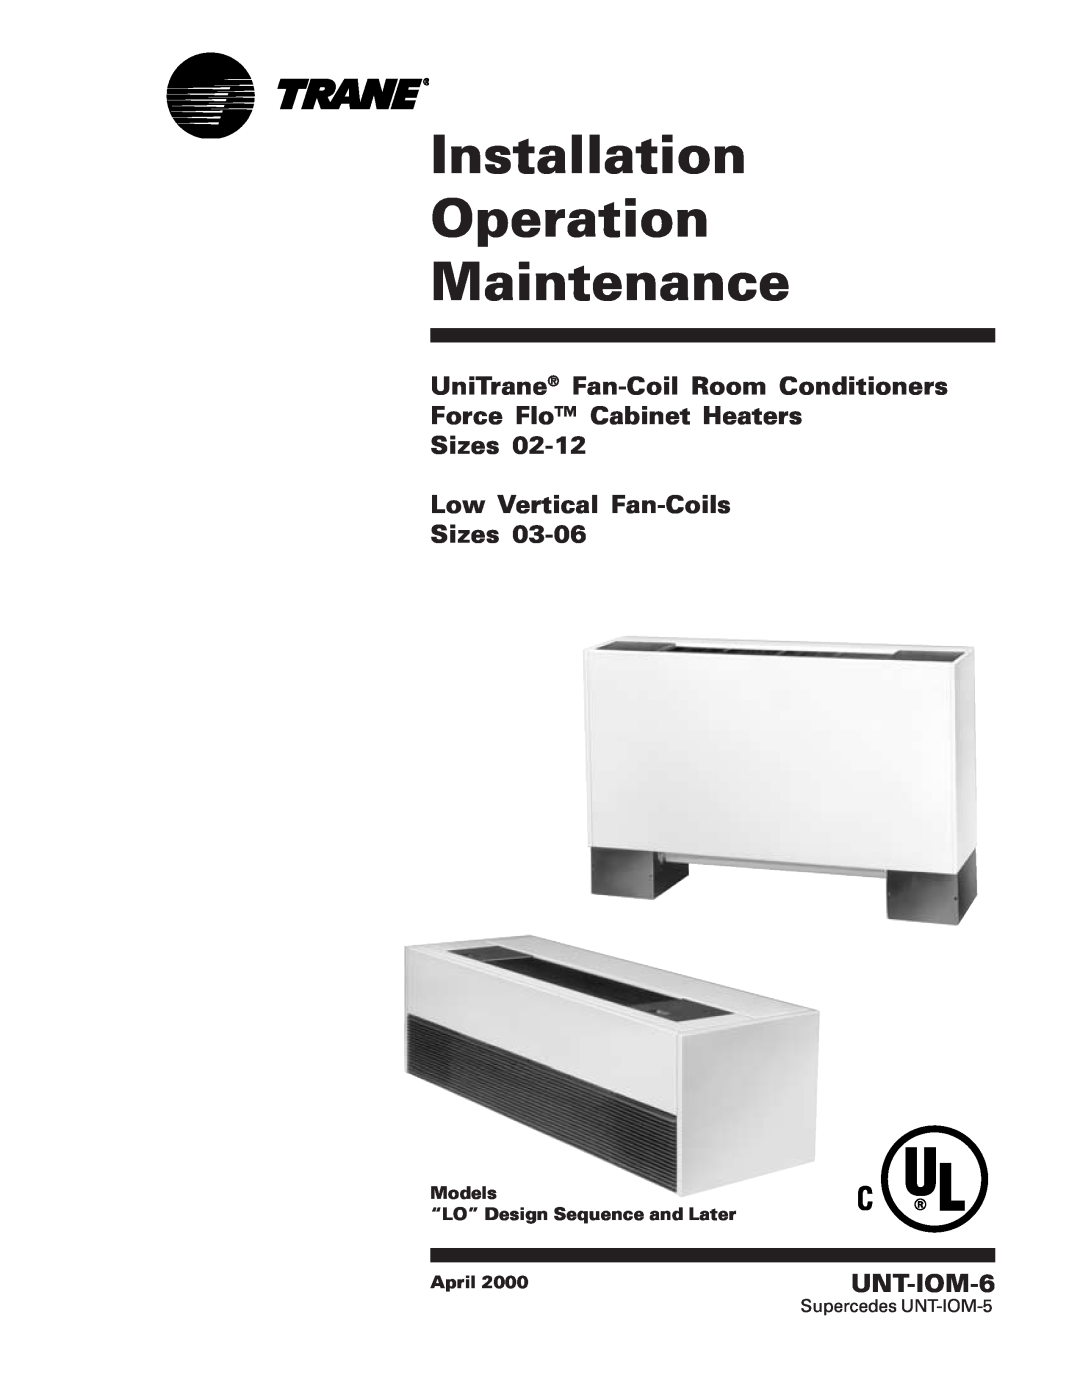 Trane LO manual UniTrane Fan-CoilRoom Conditioners, Force Flo Cabinet Heaters Sizes, Low Vertical Fan-Coils Sizes, April 